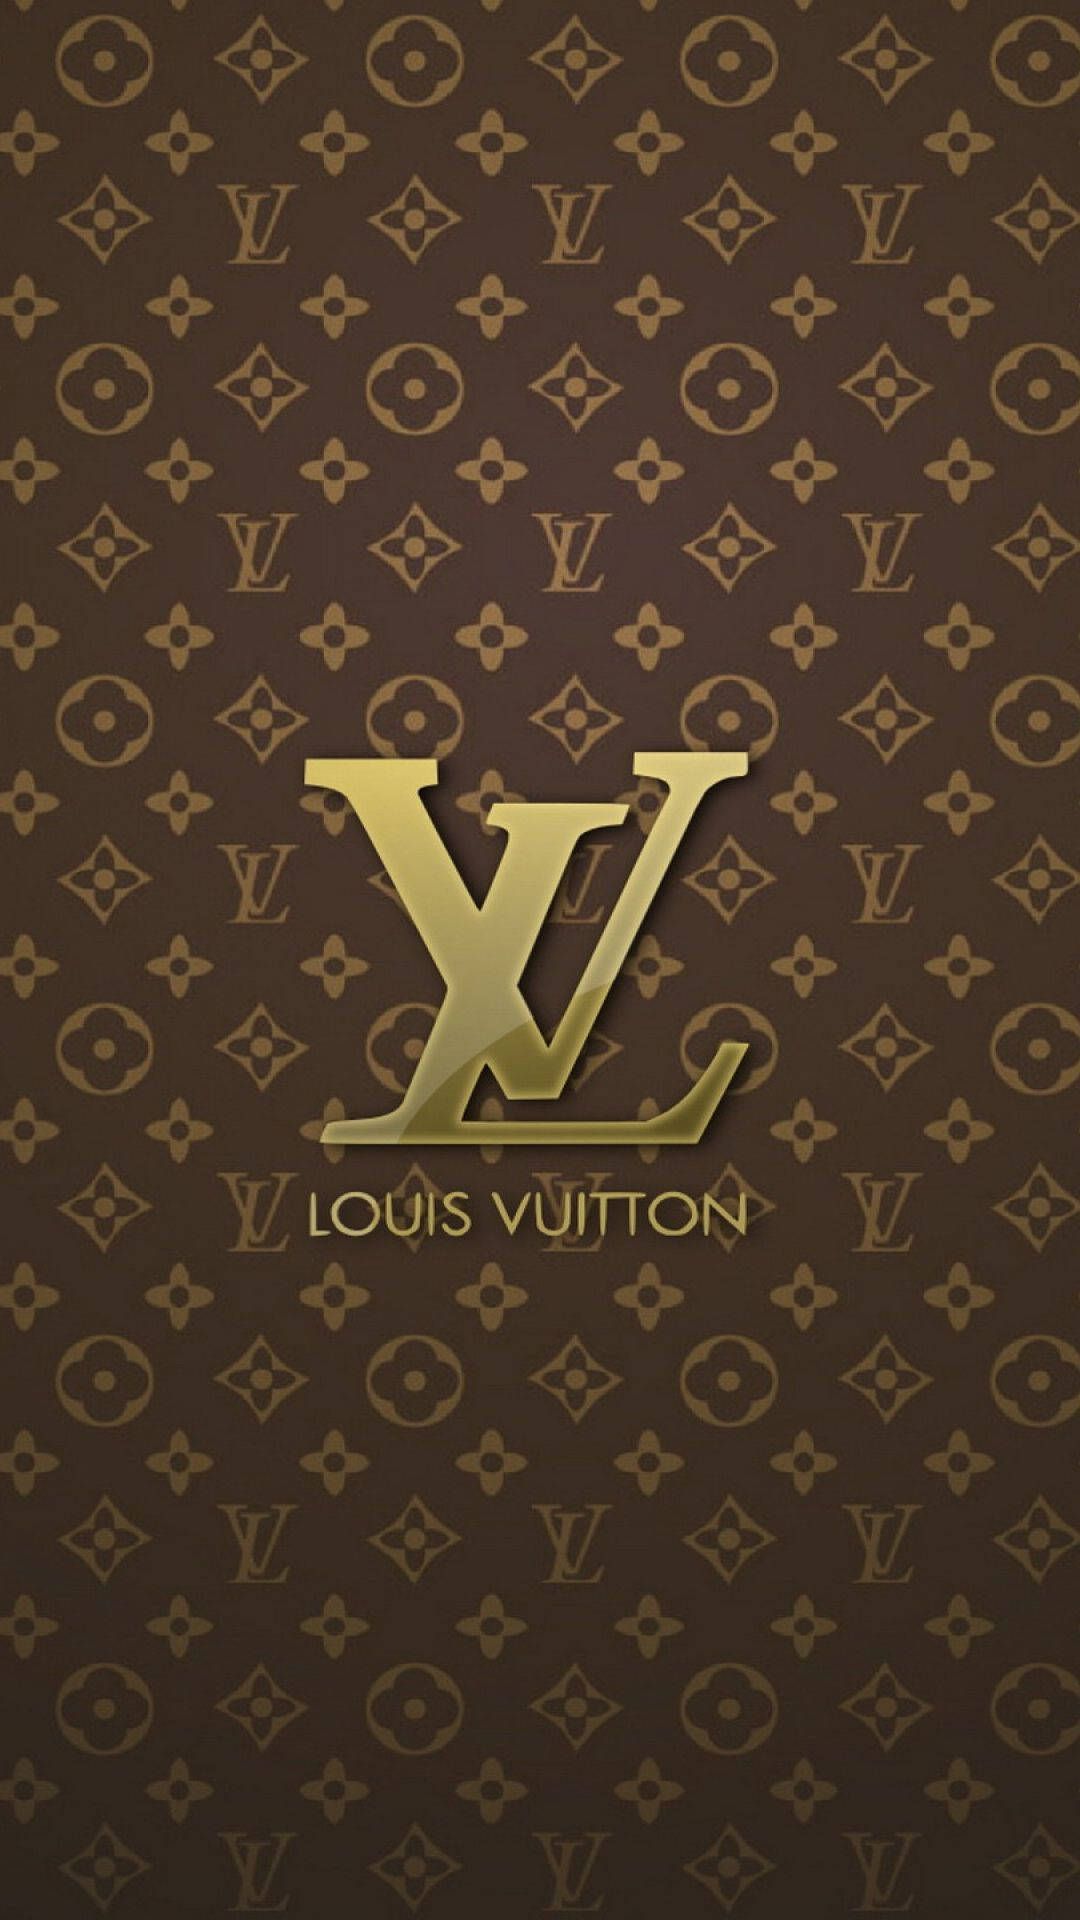  Louis Vuitton Hintergrundbild 1080x1920. Free Louis Vuitton Wallpaper Downloads, Louis Vuitton Wallpaper for FREE